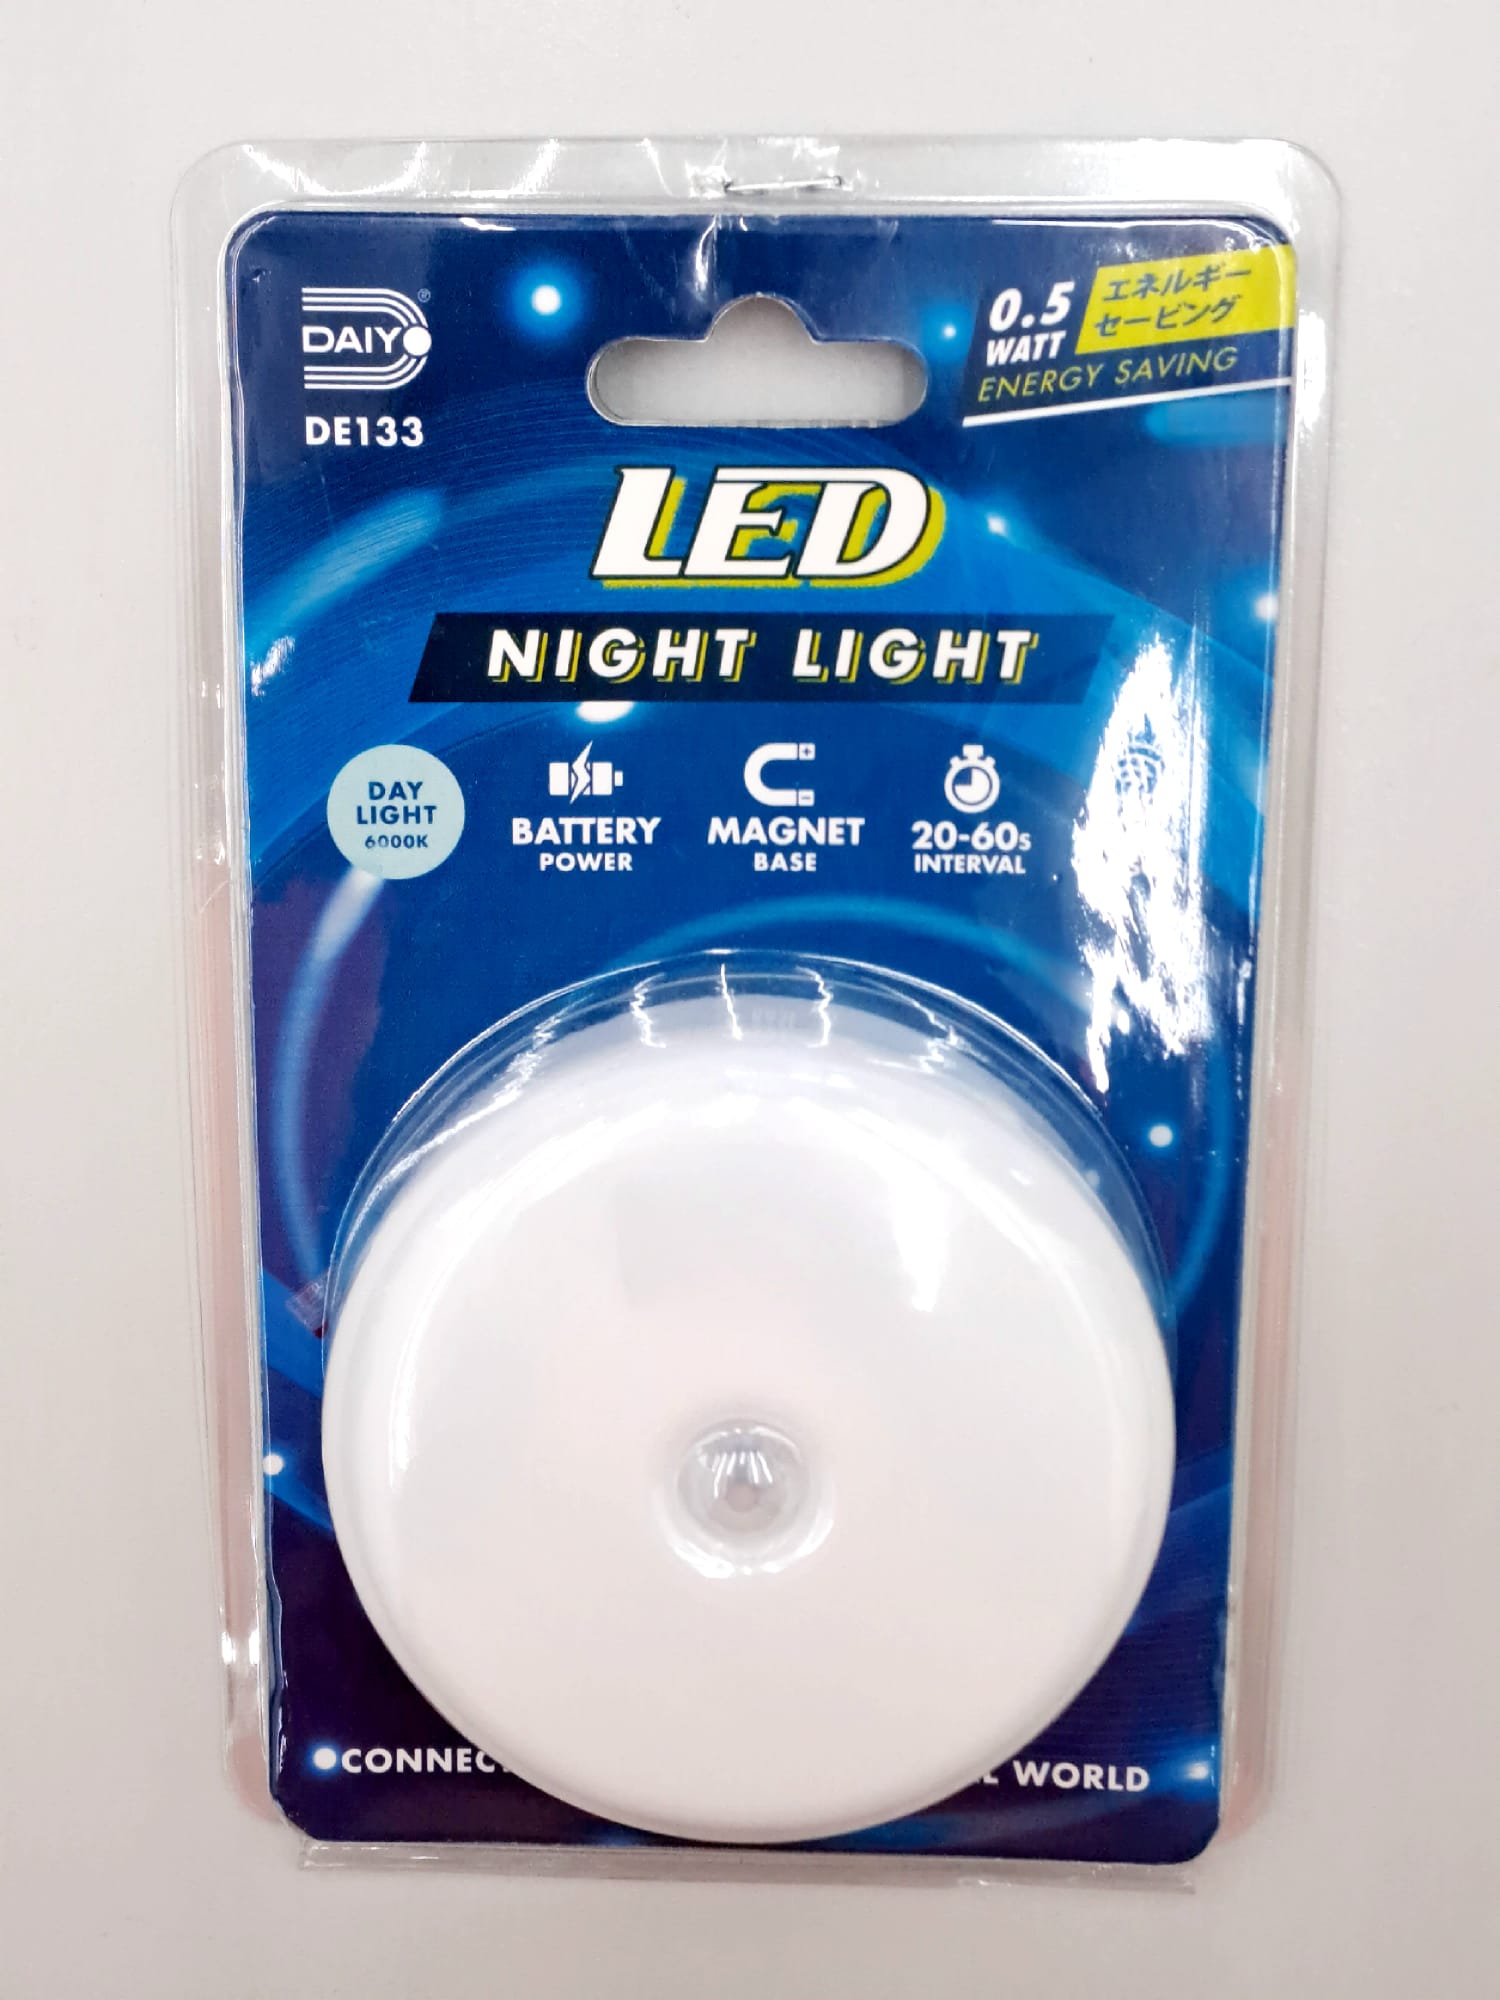 Daiyo LED Night Light PIR Sensor + Interval/Battery